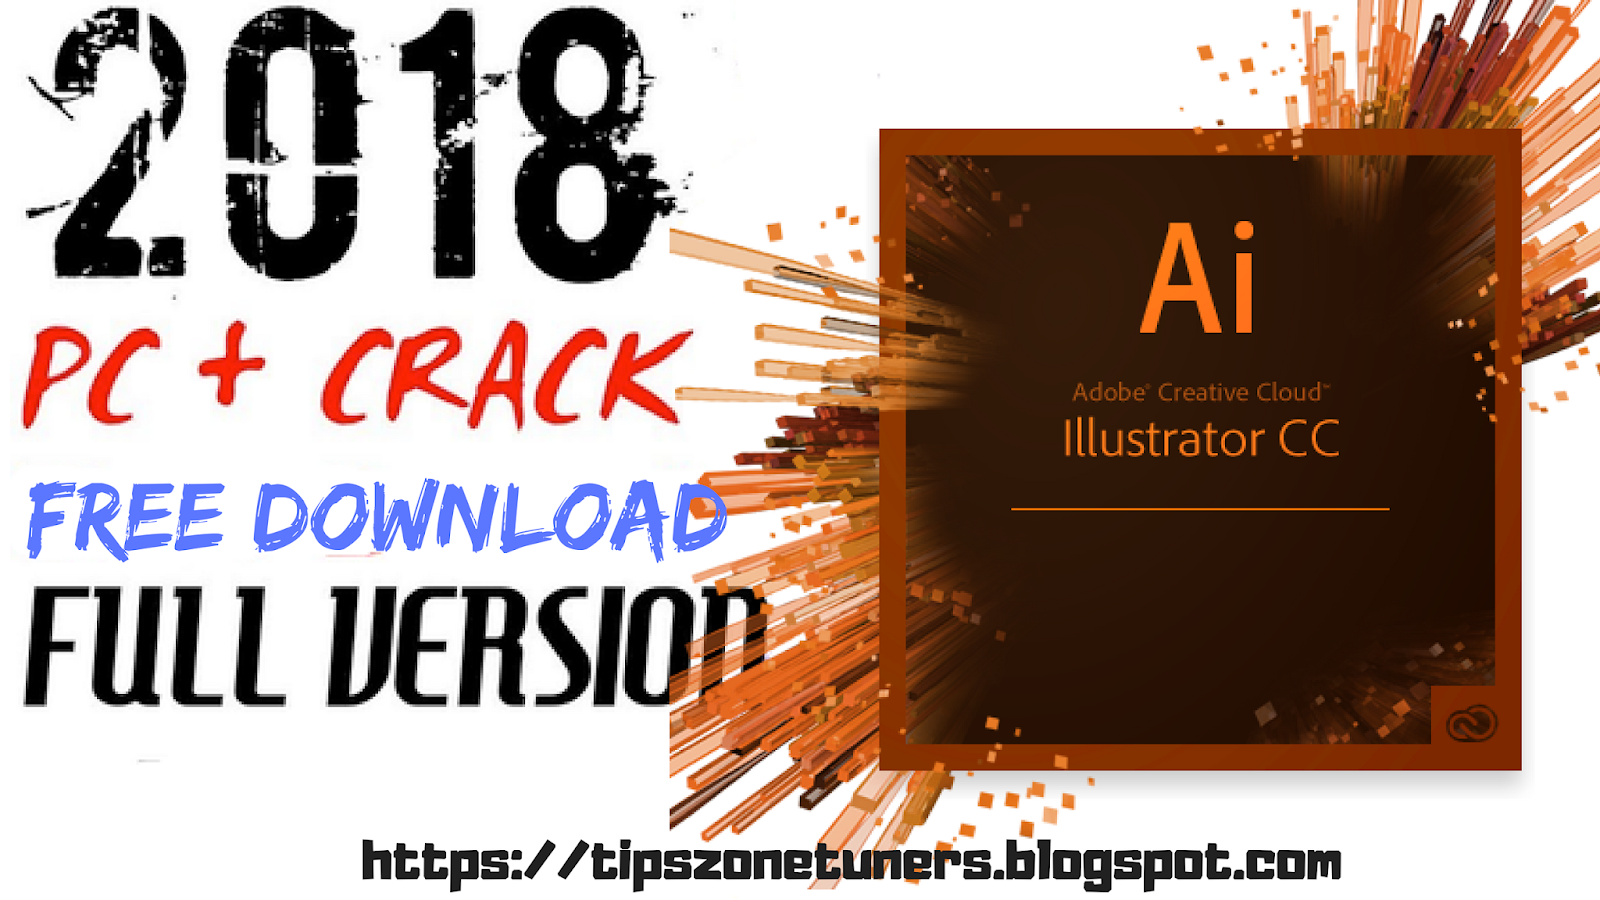 Adobe Illustrator Cc free. download full Version Mac